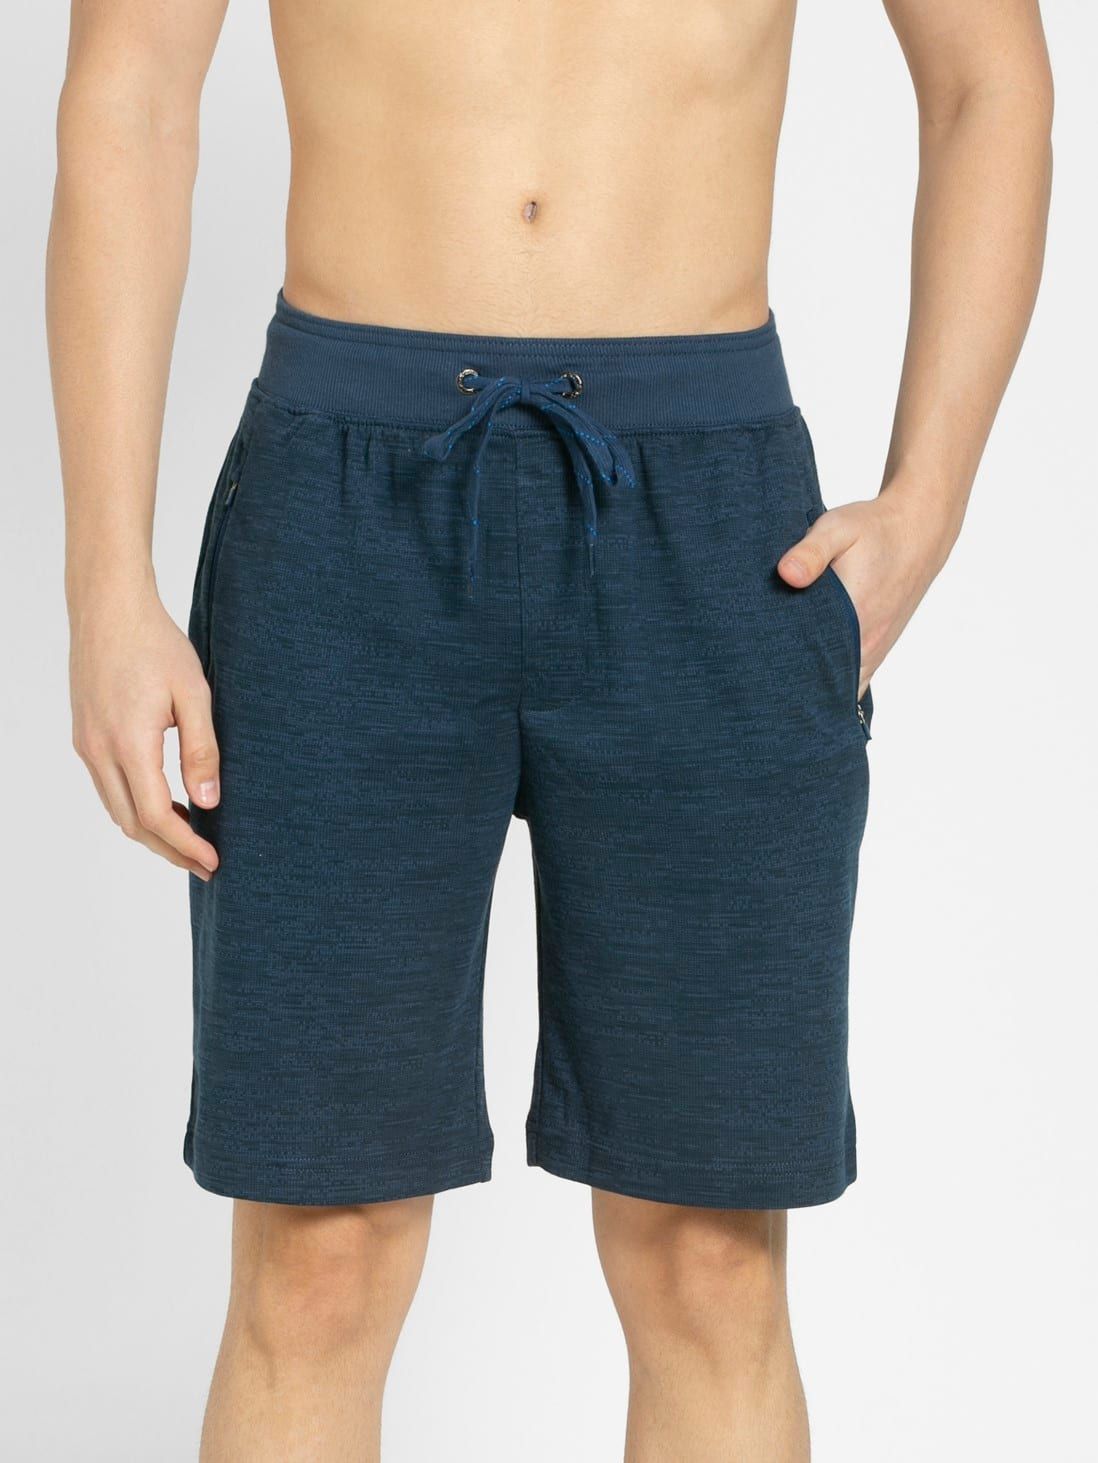     			Jockey AM14 Men's Super Combed Cotton Rich Shorts with Zipper Pockets - Insignia Blue Prints